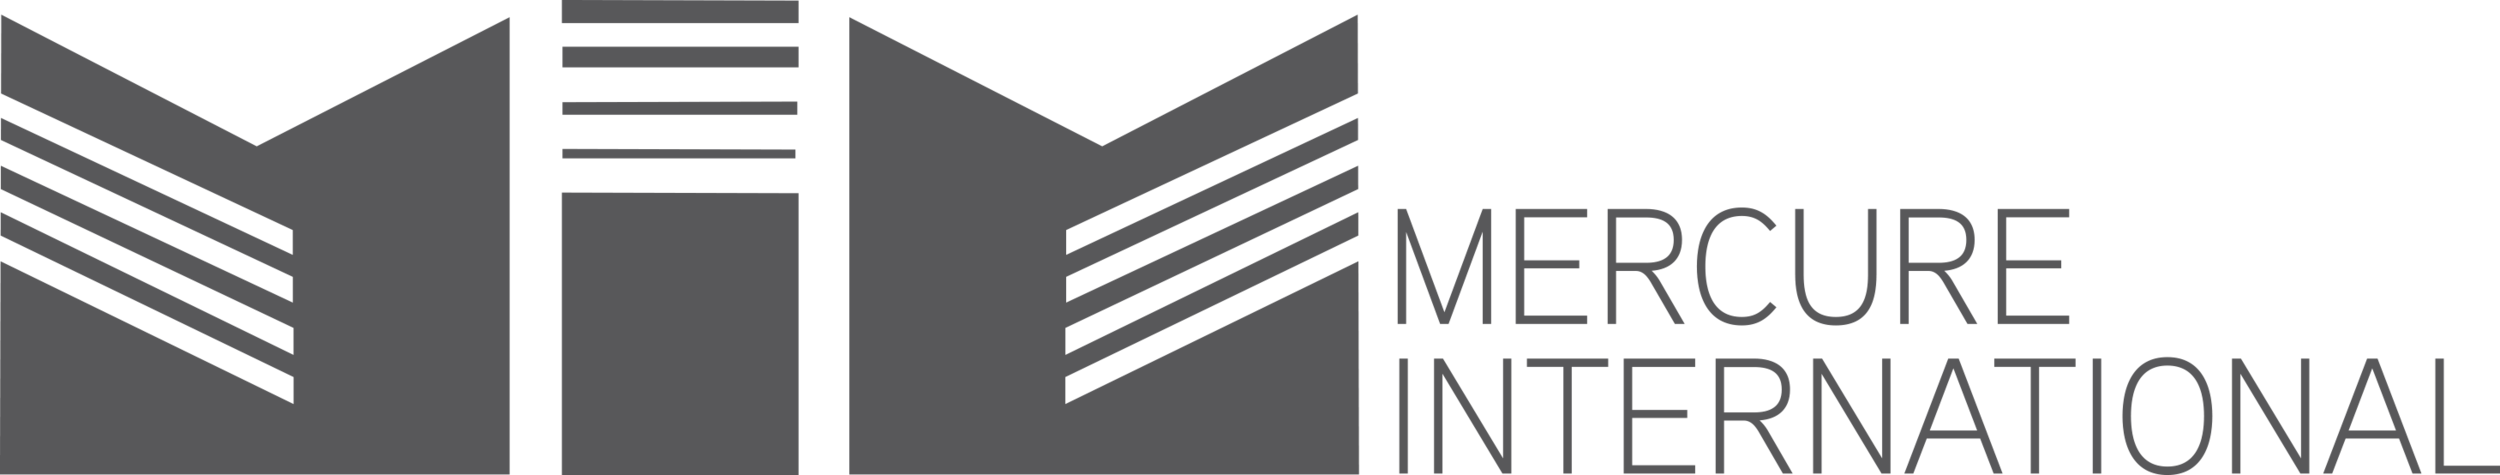 logo mercure international.png